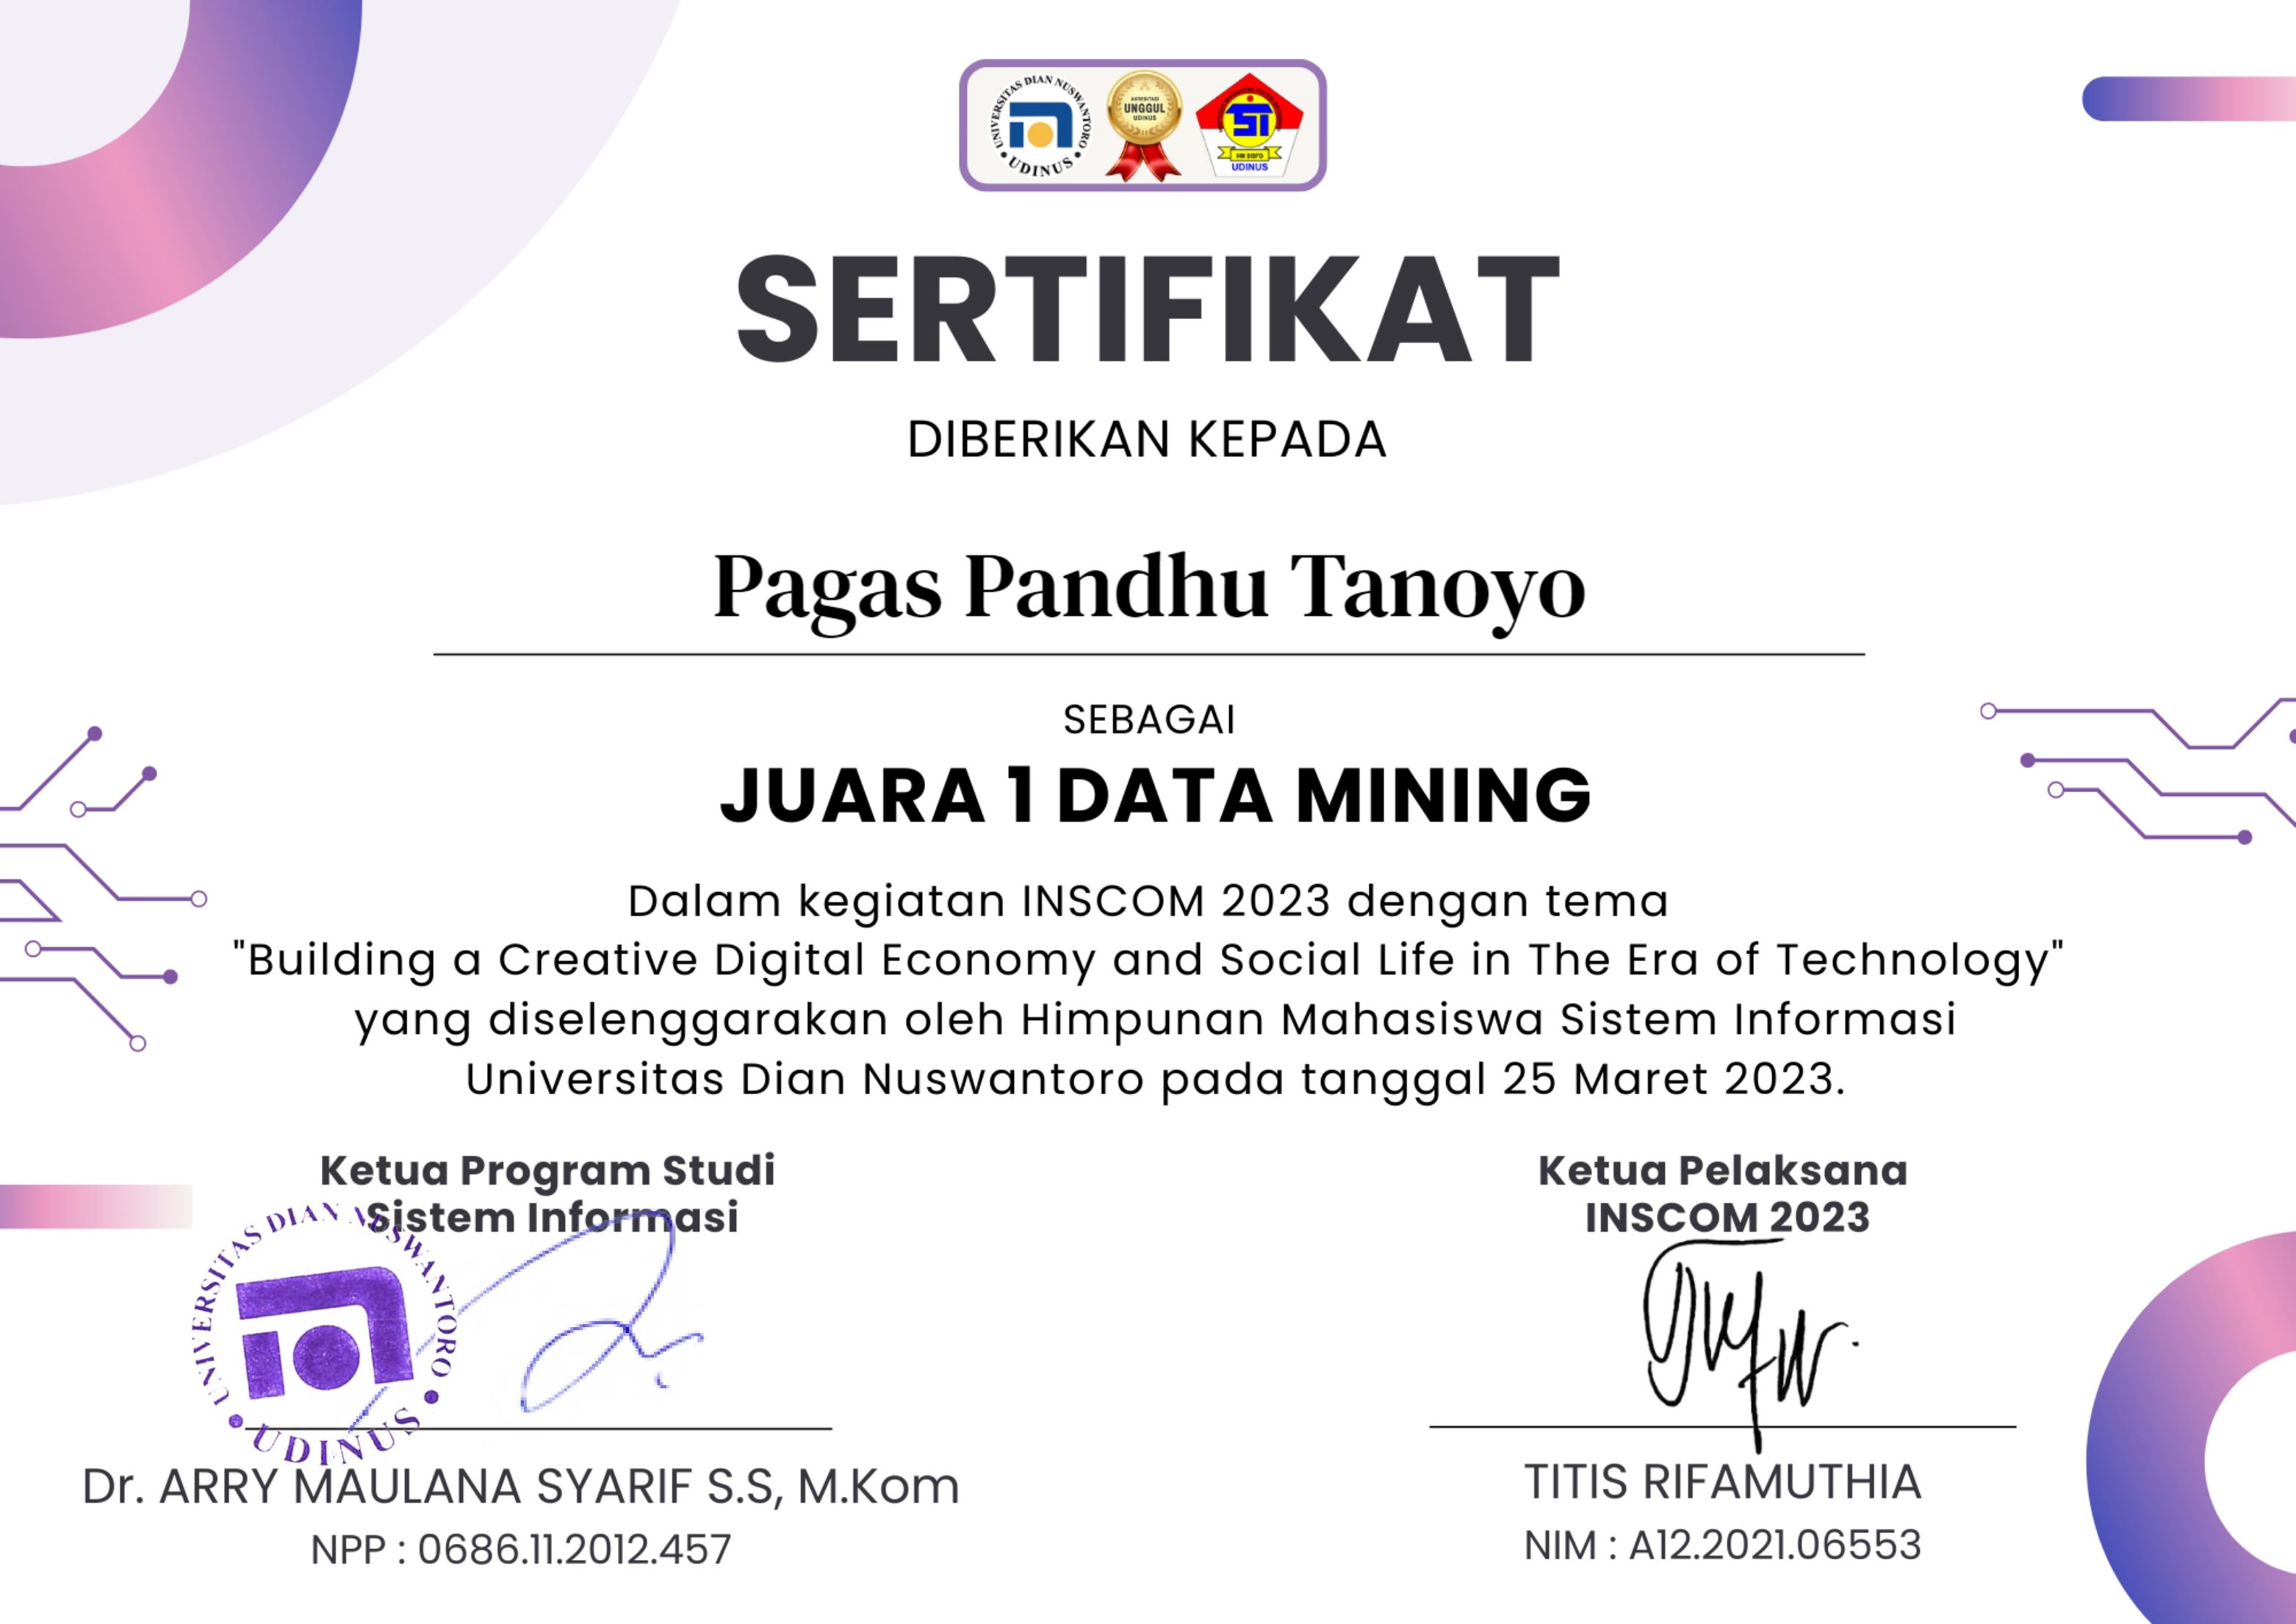 Sertifikat juara 1 Data Mining